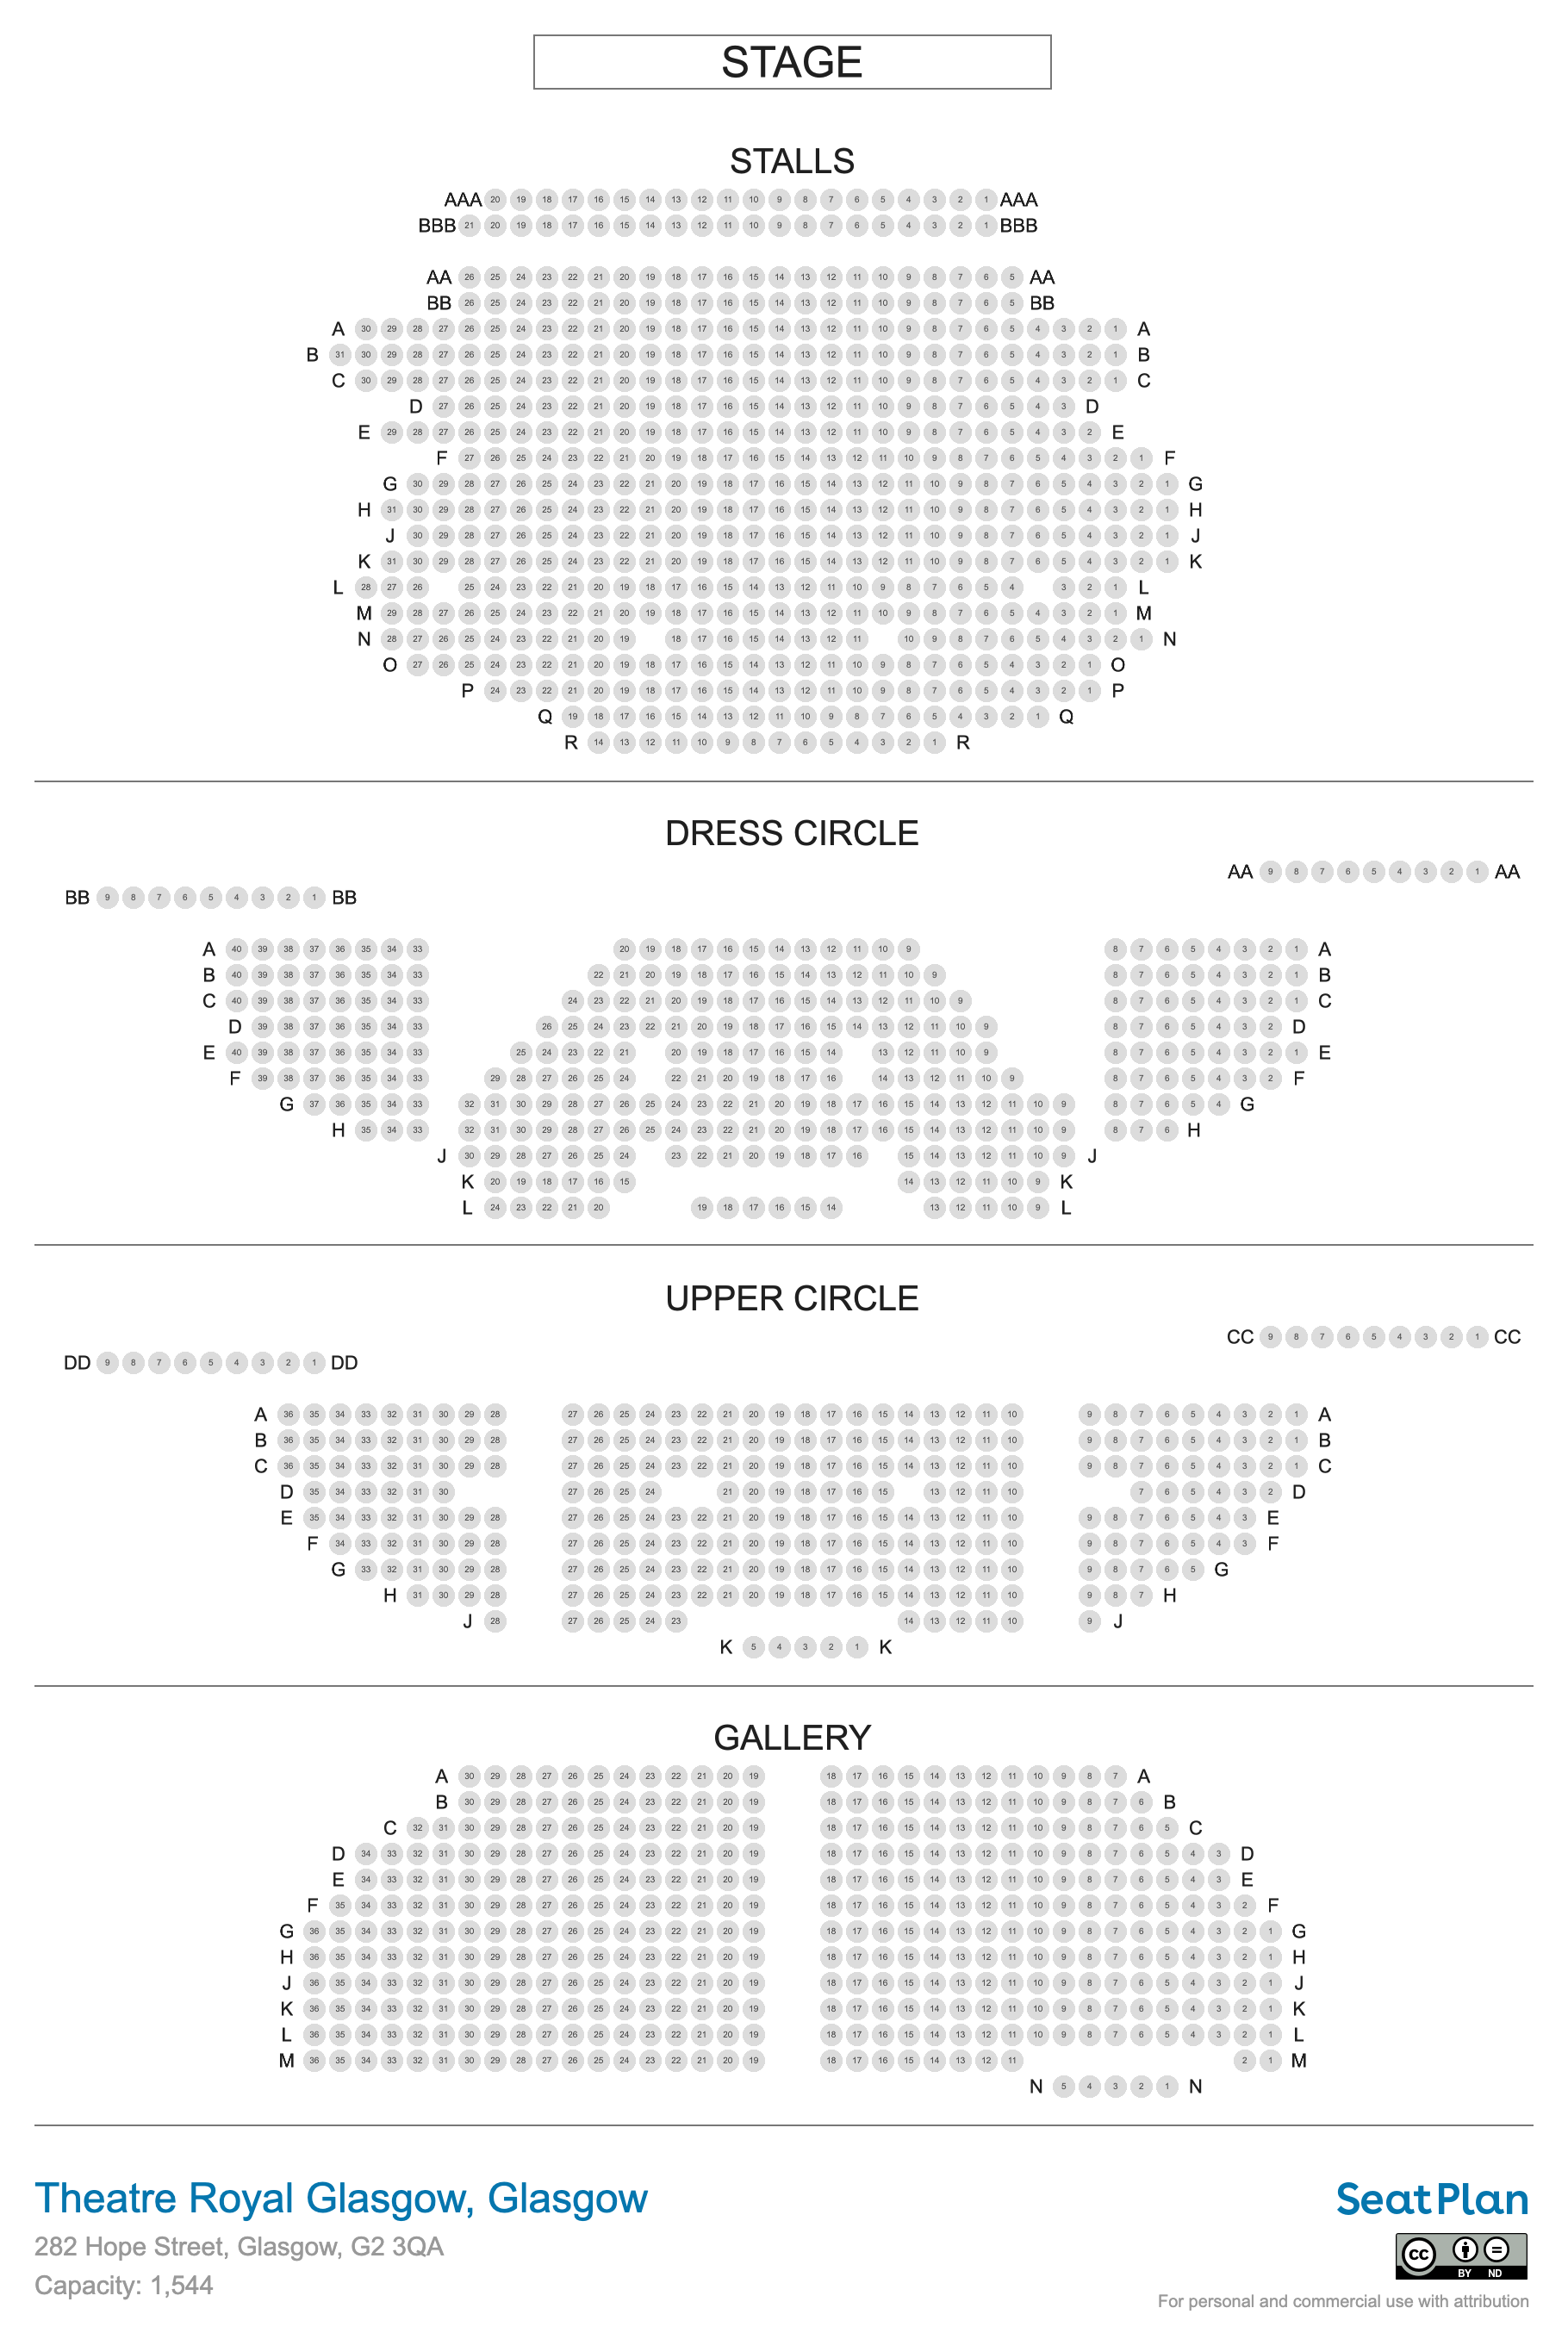 Theatre Royal Glasgow Seating Plan